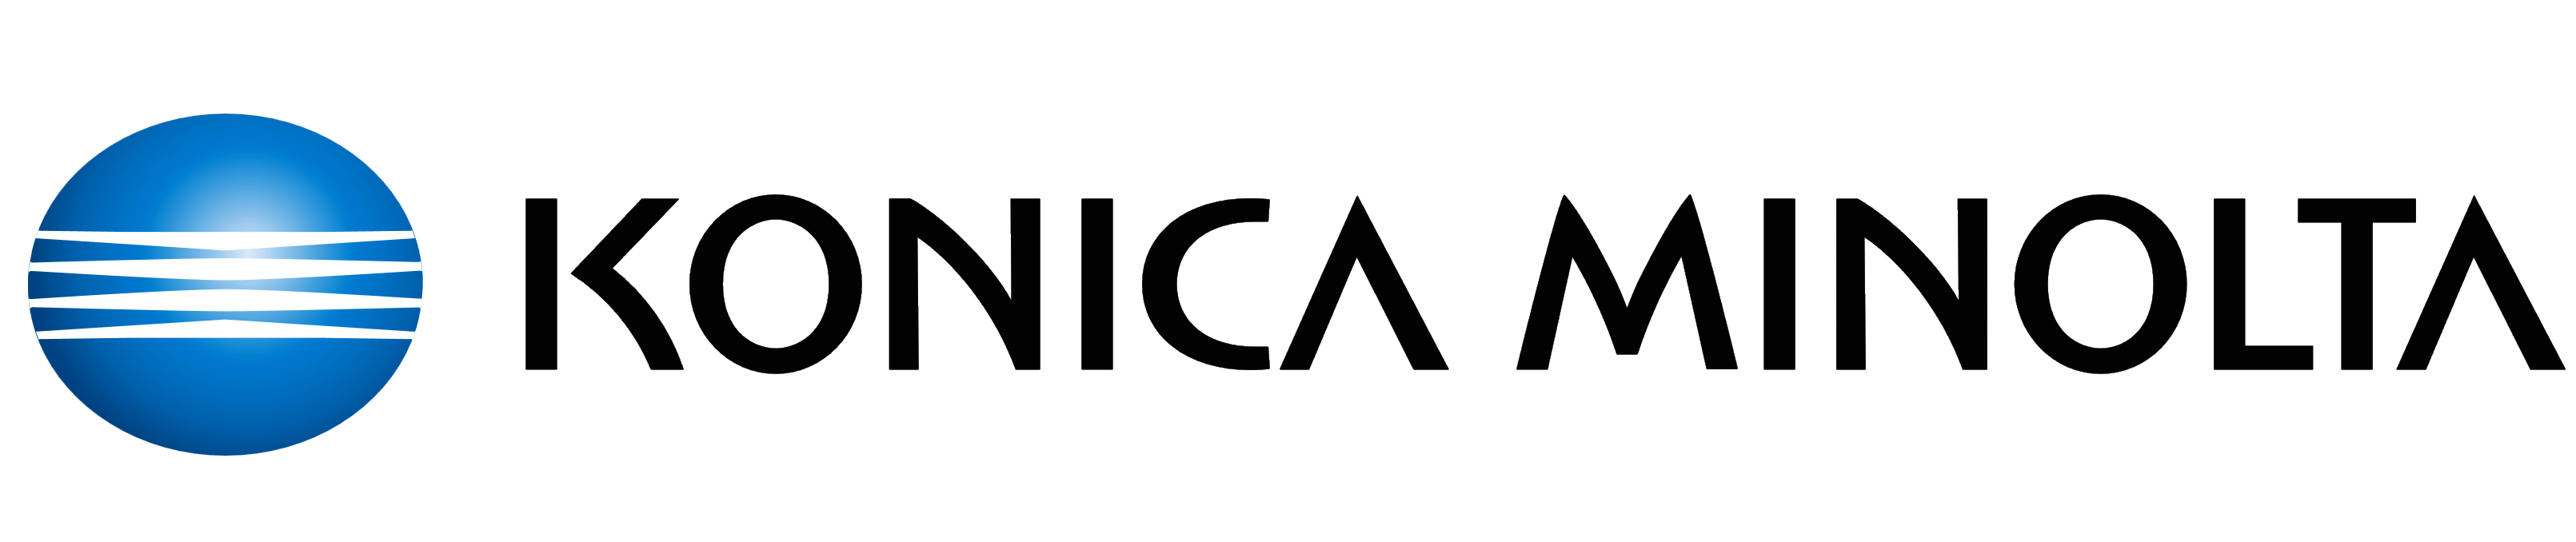 Konica Minolta logo, logotype